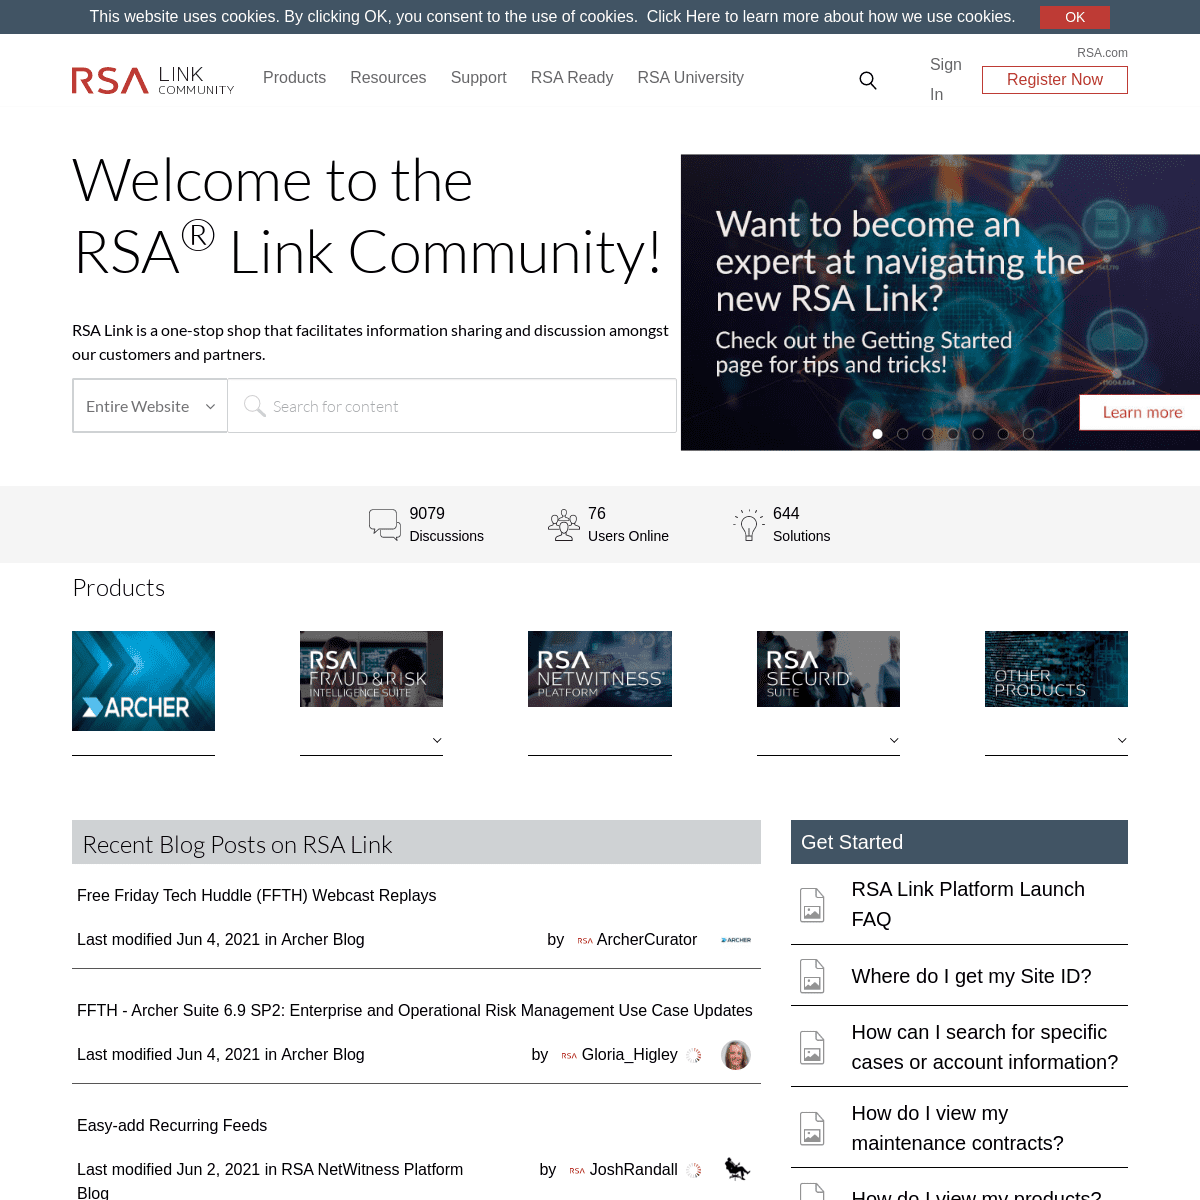 A complete backup of https://community.rsa.com